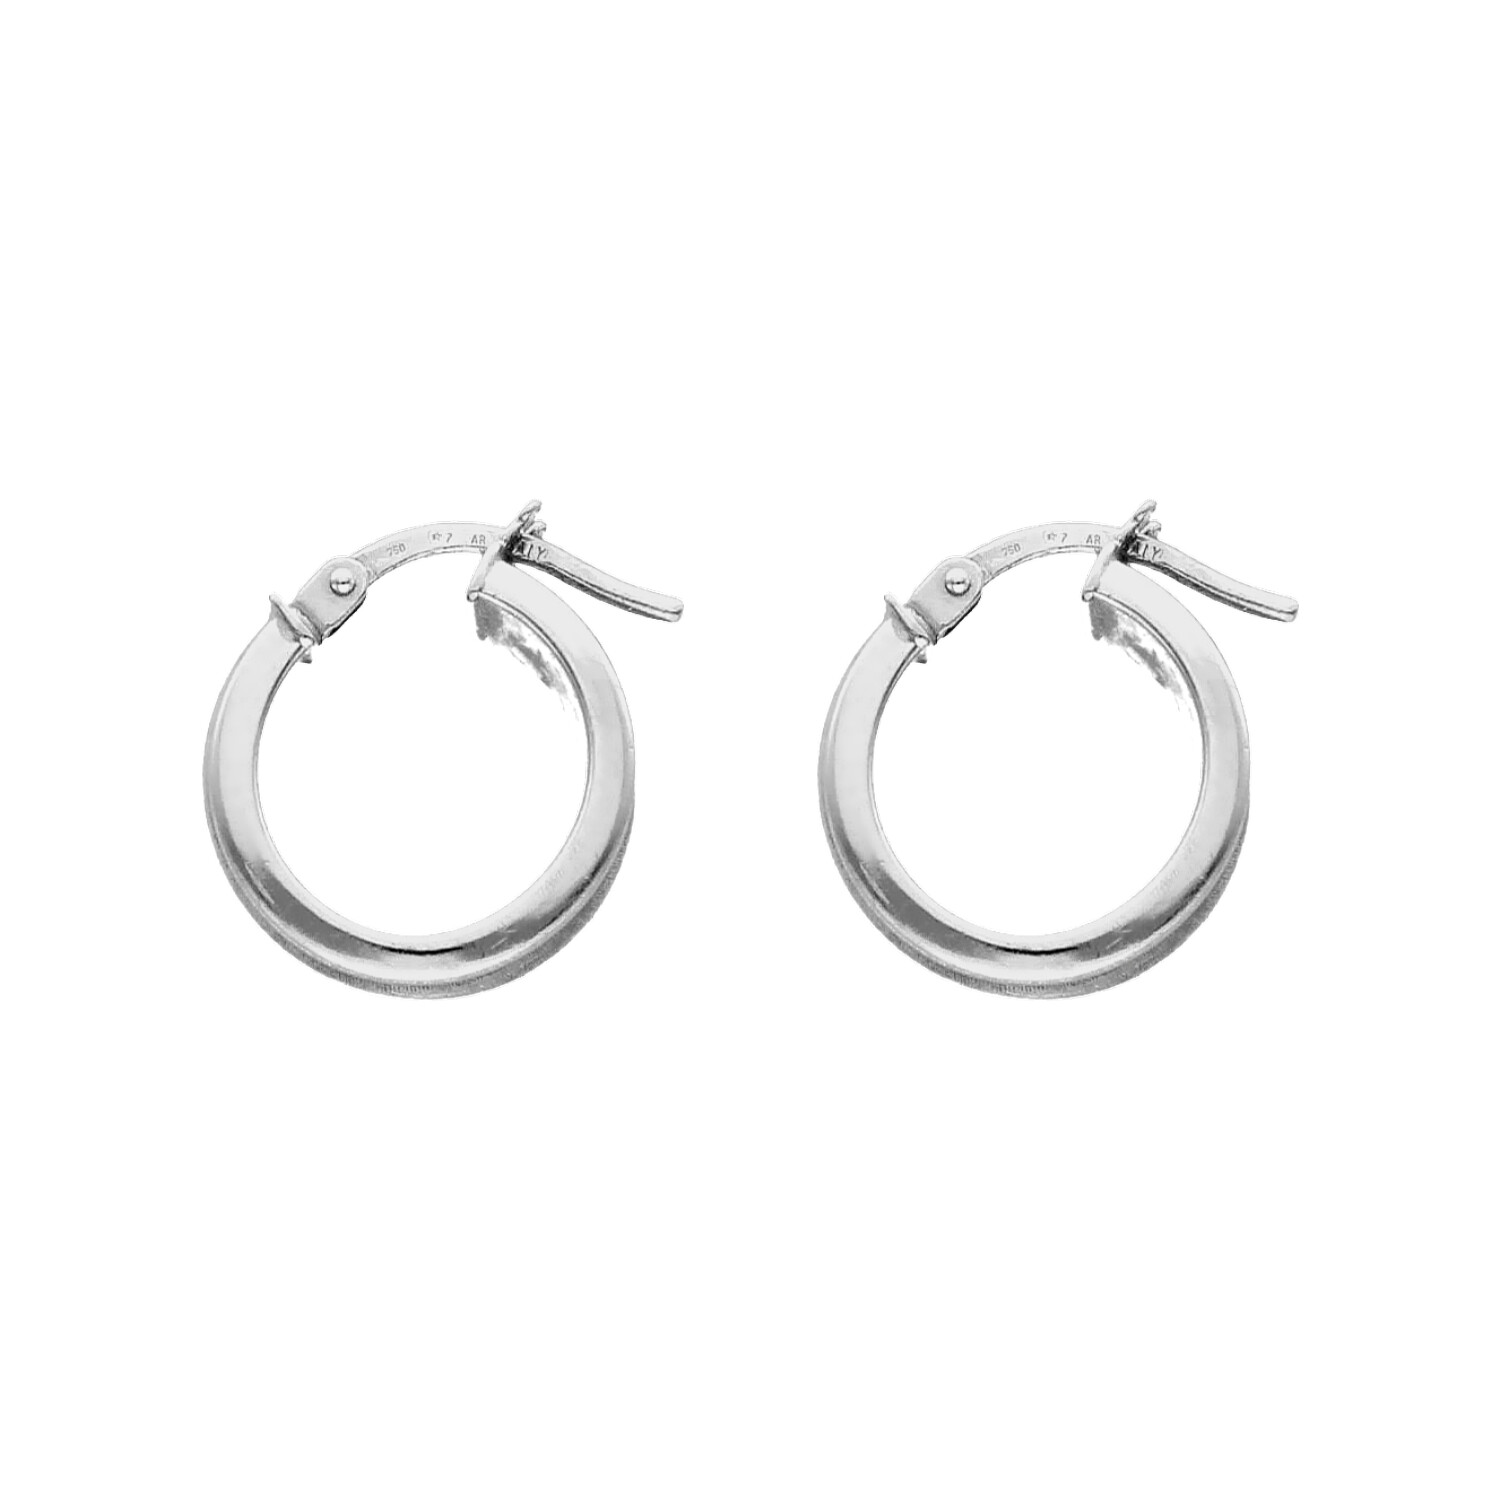 White gold circle earrings